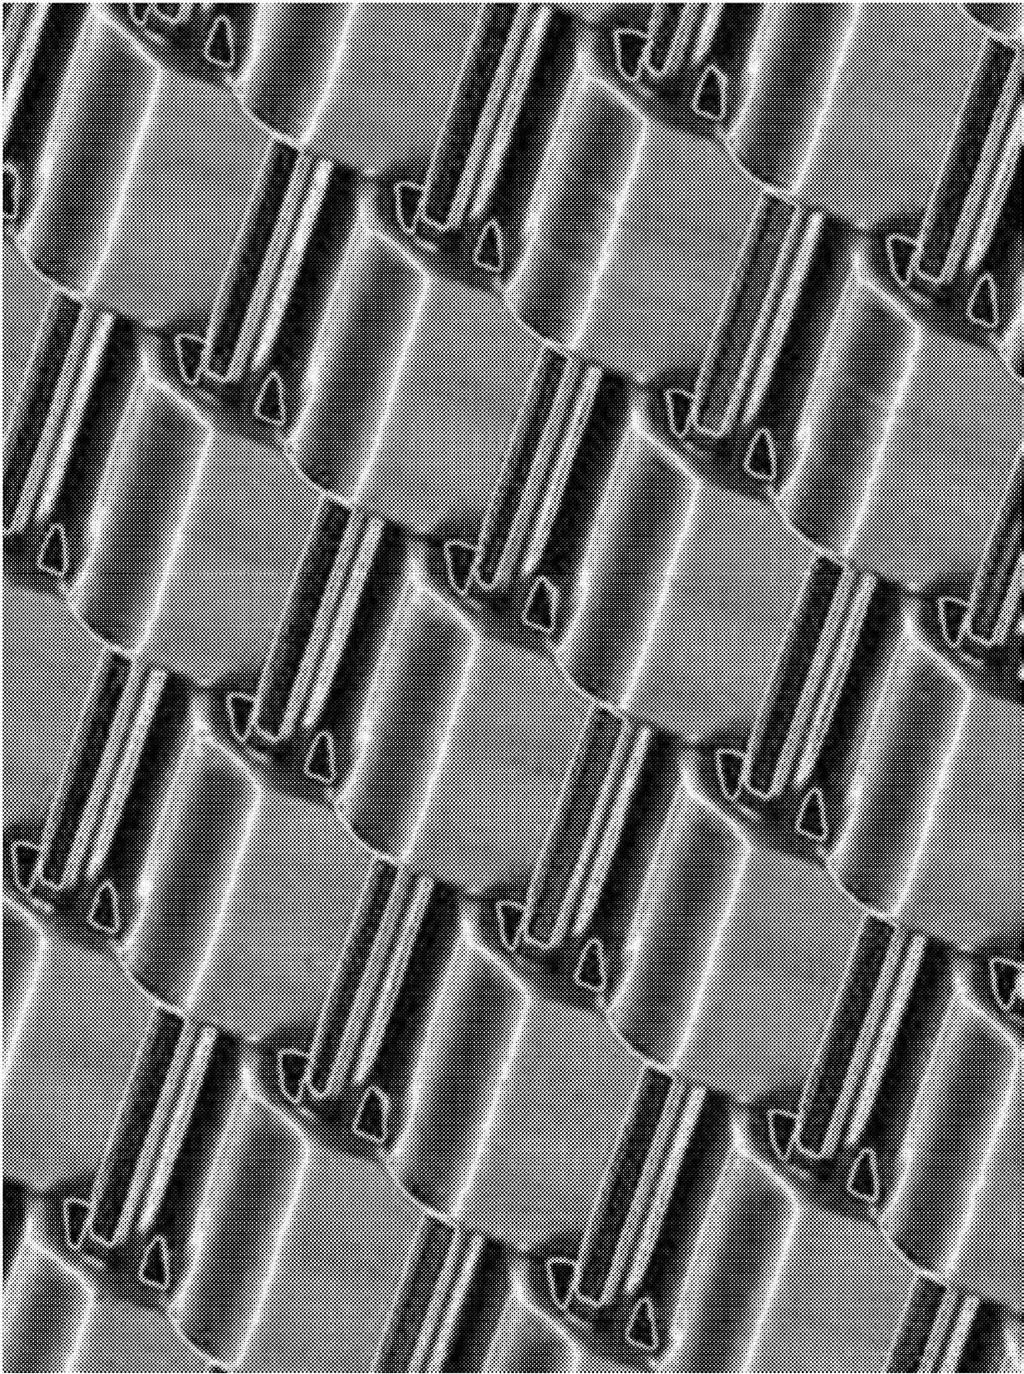 LOT 1 Tauba Auerbach San Francisco, USA 1981 A Flexible Fabric of Inflexible Parts, 2015 Screenprint on metallic Duralar